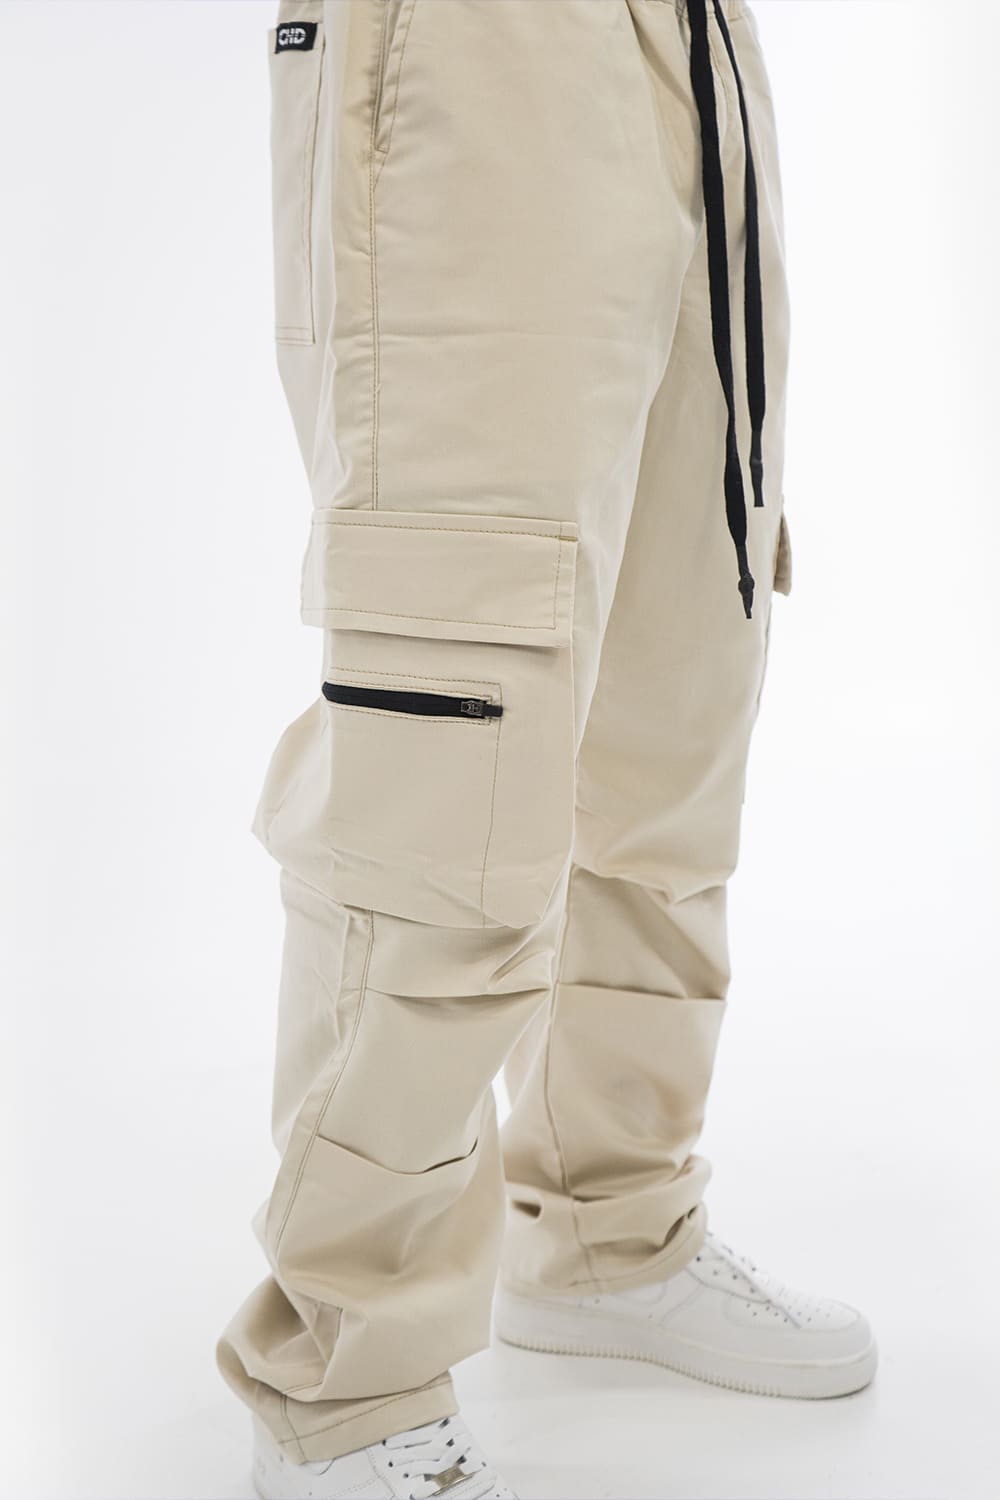 BCO mid zip Cargo pants SAND 8247